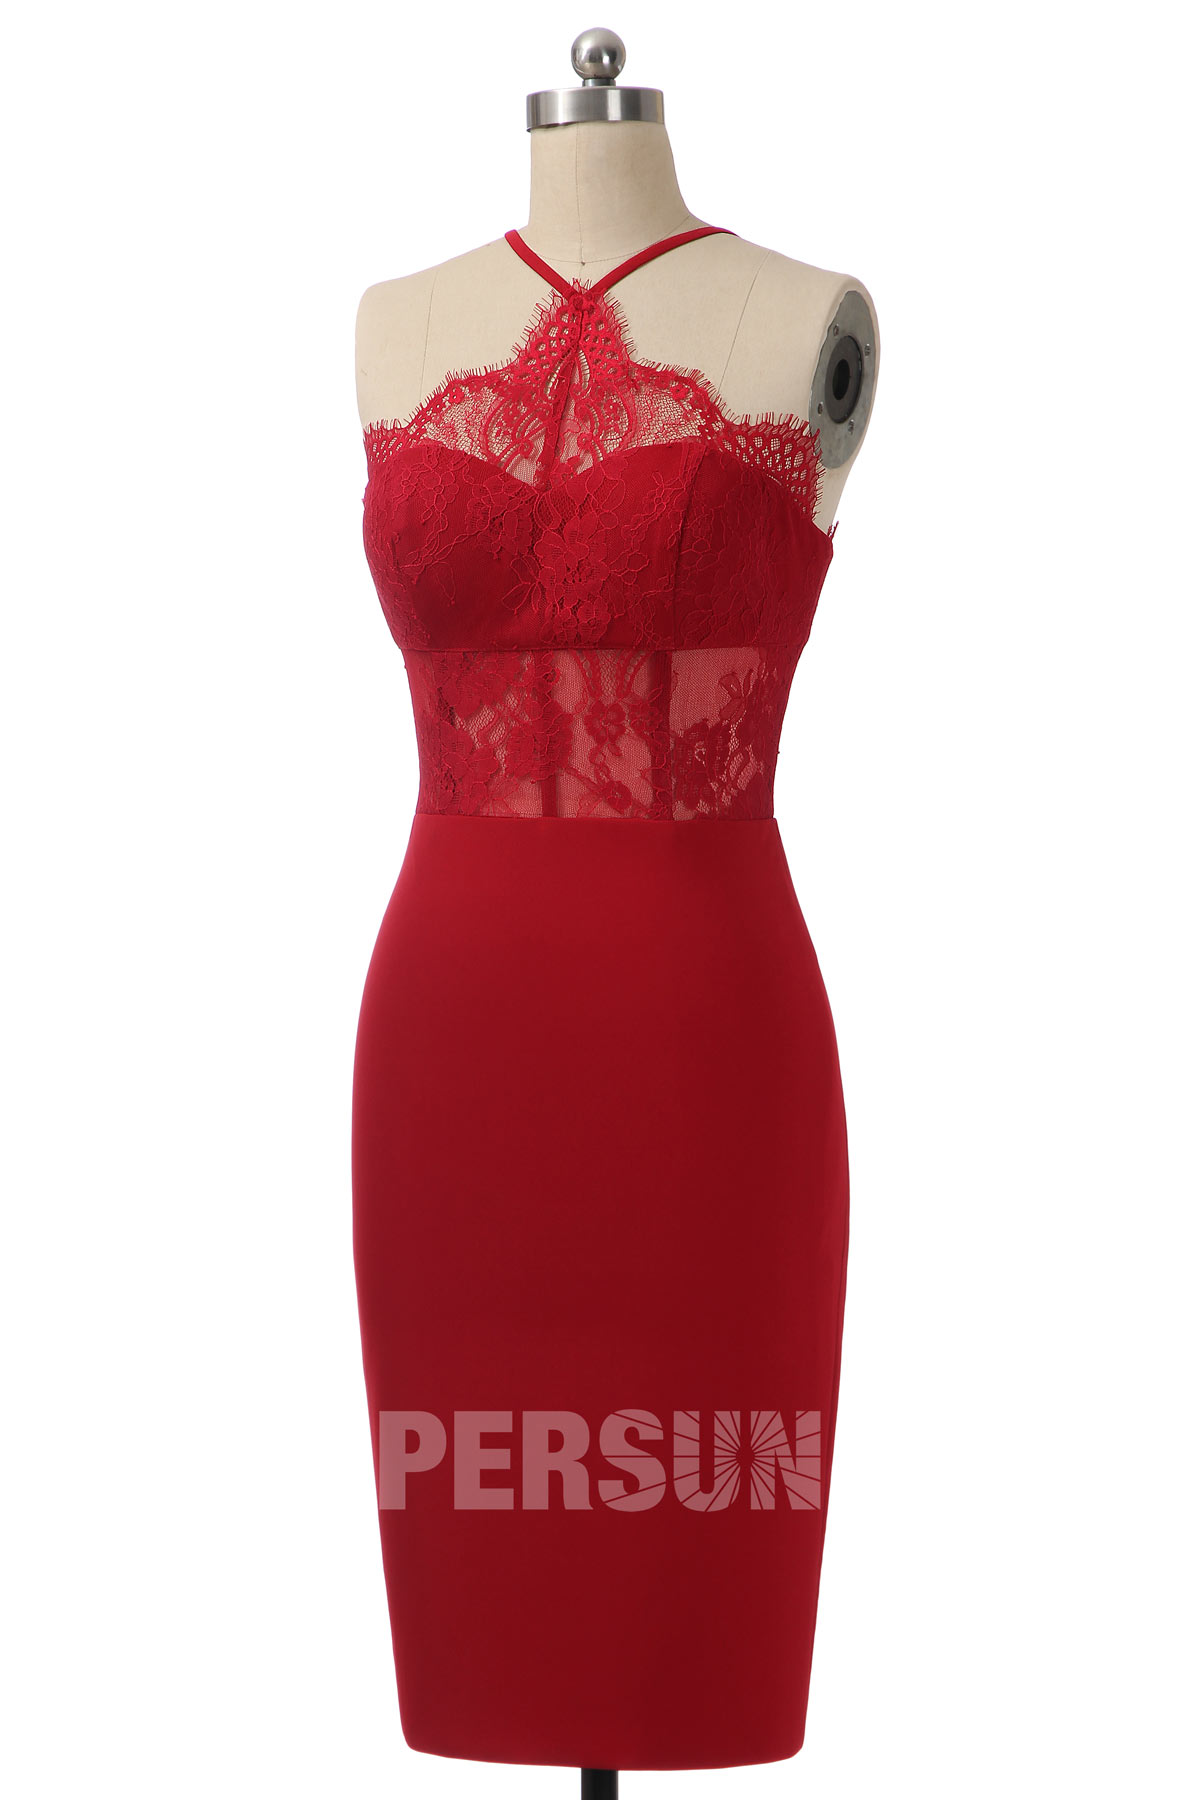 petite robe rouge moulante taille transparente pour cocktail